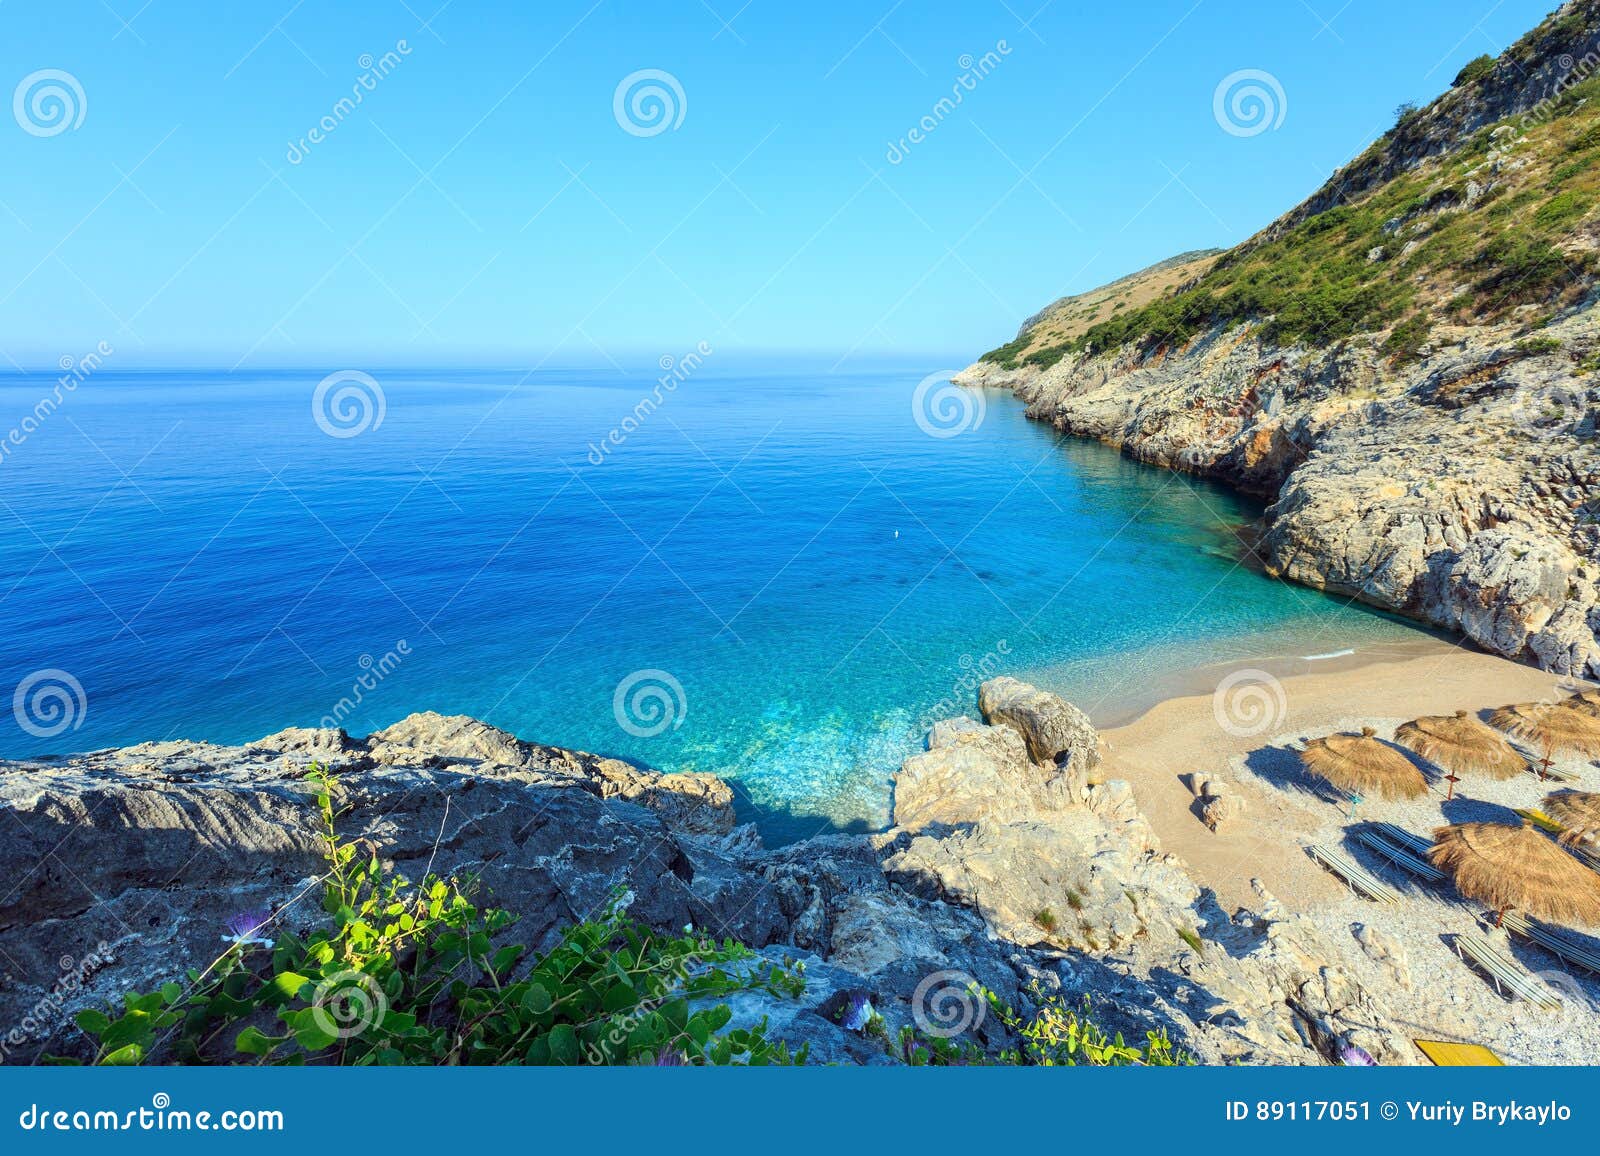 Foragt Sæson portugisisk Summer Ionian Sea Coast, Albania. Stock Image - Image of blue, relax:  89117051